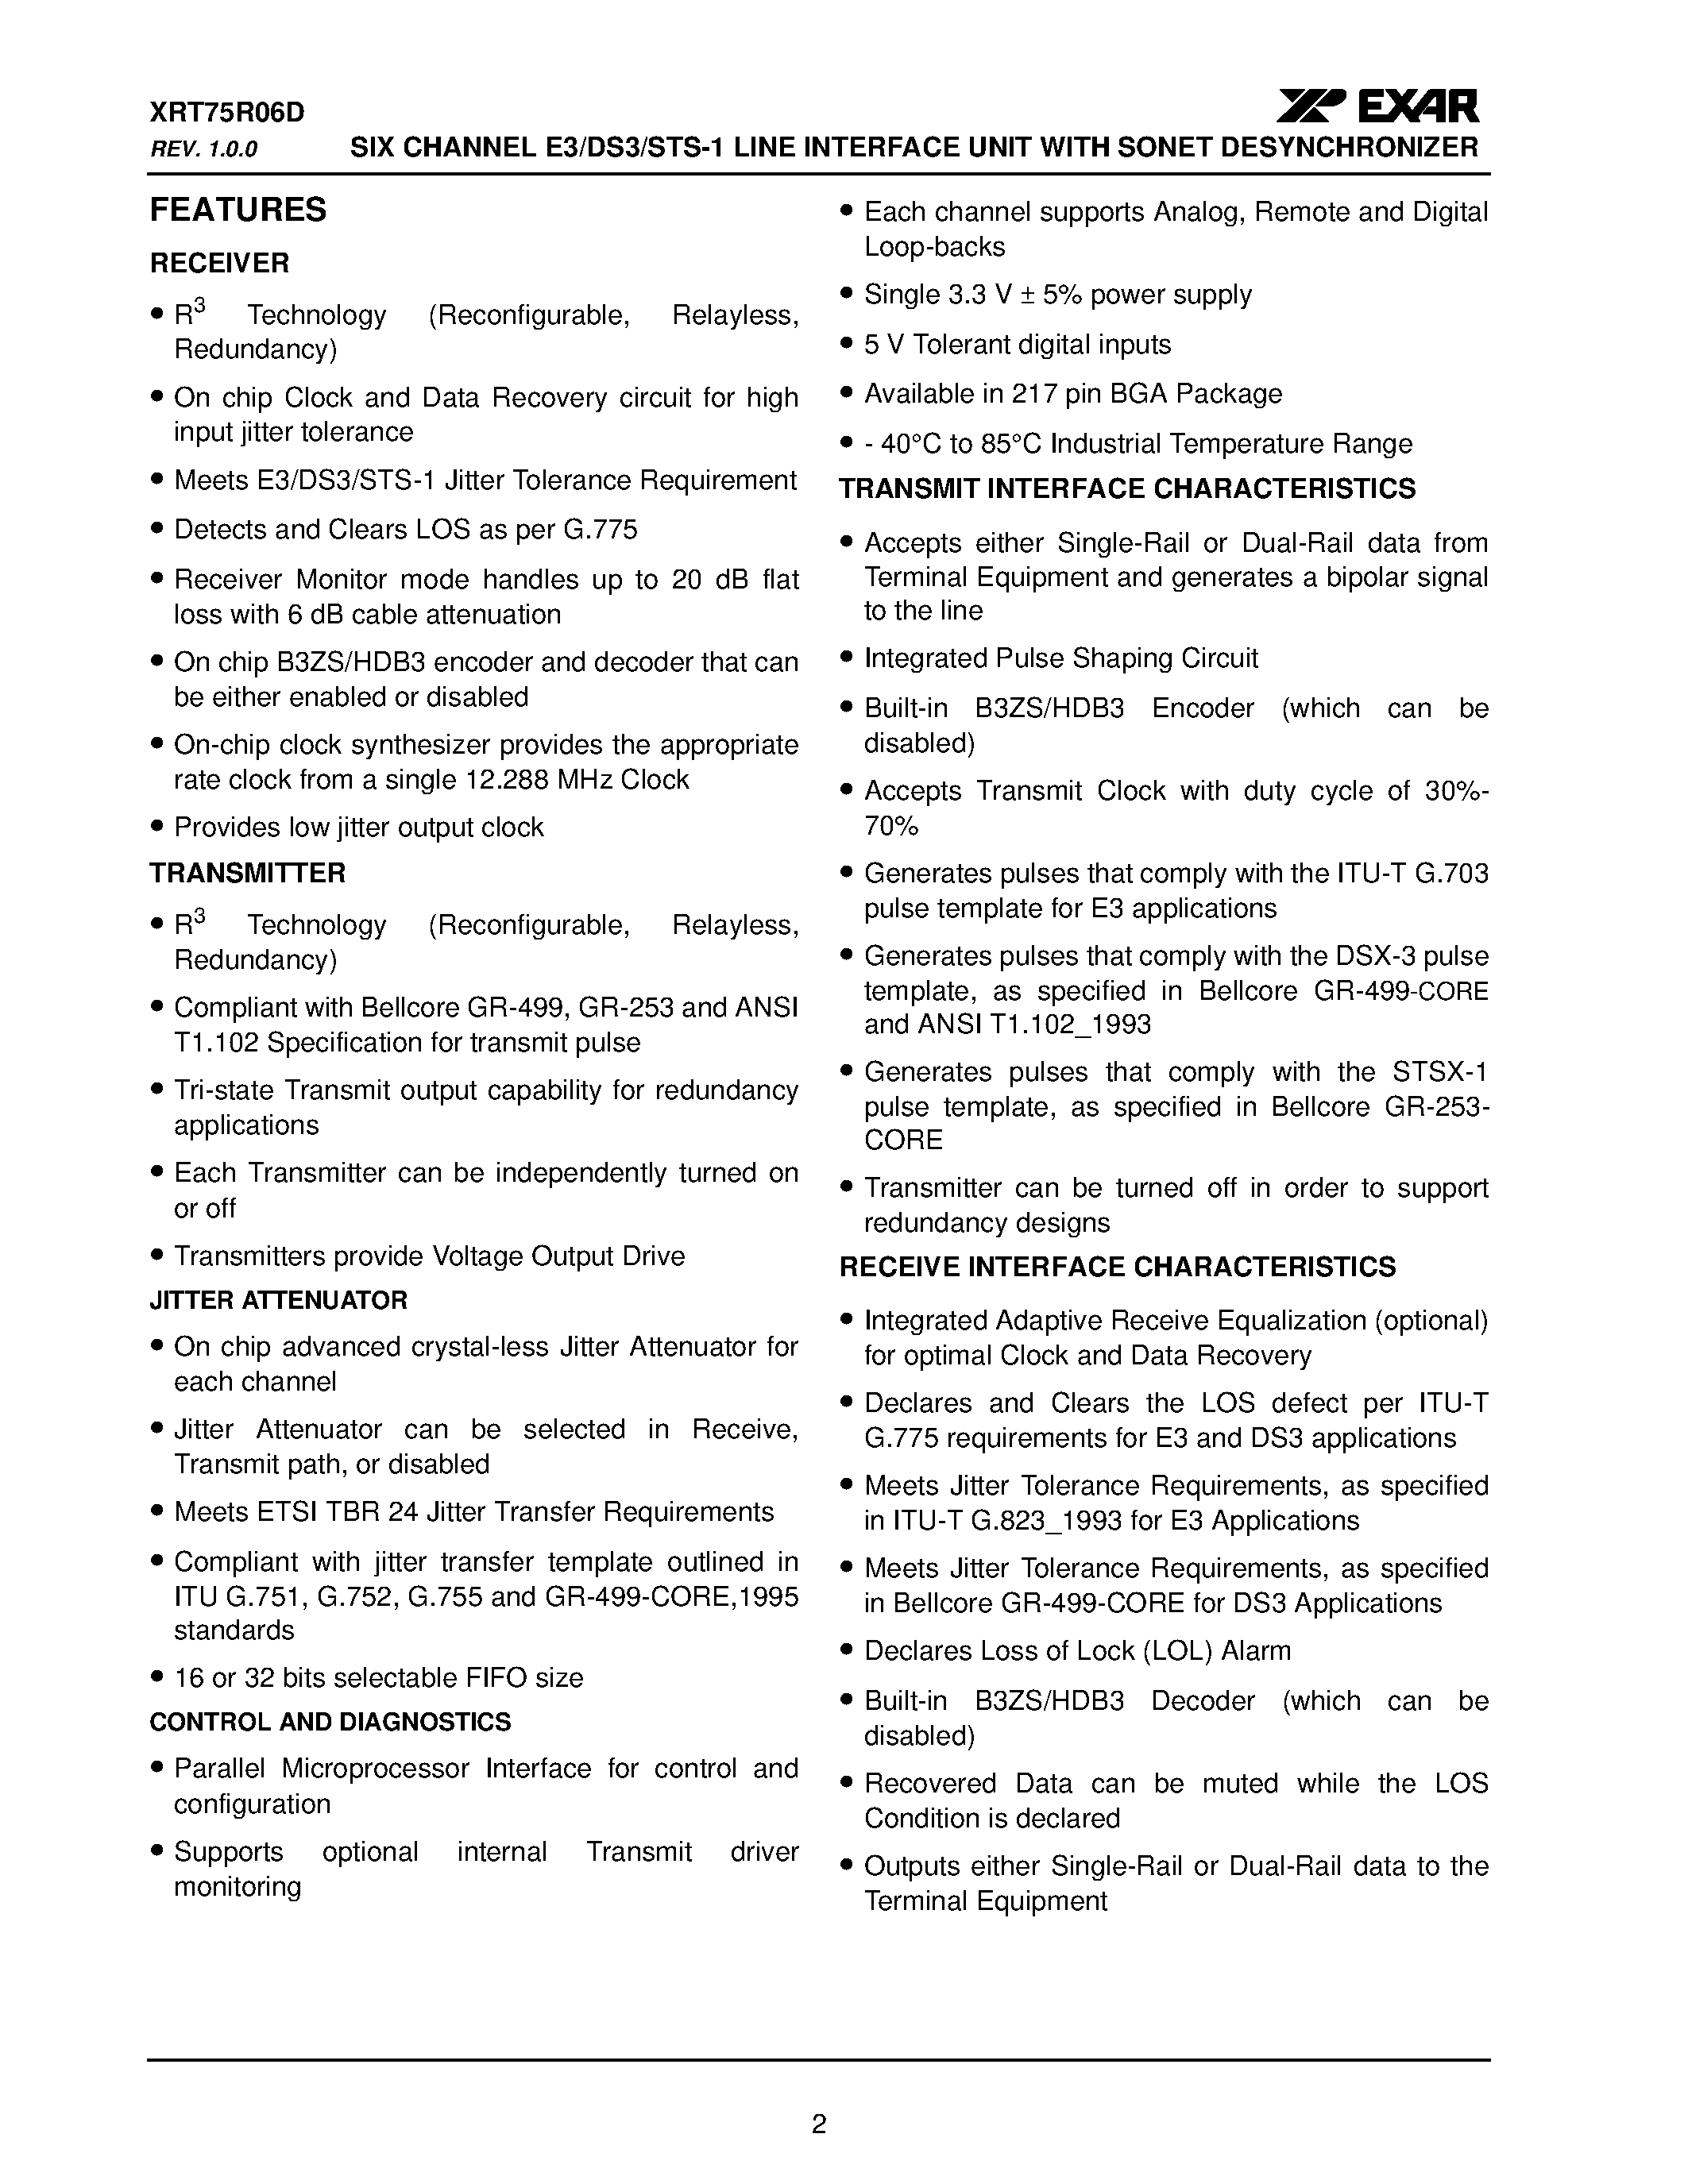 Datasheet XRT75R06D - SIX CHANNEL E3/DS3/STS-1 LINE INTERFACE UNIT page 2